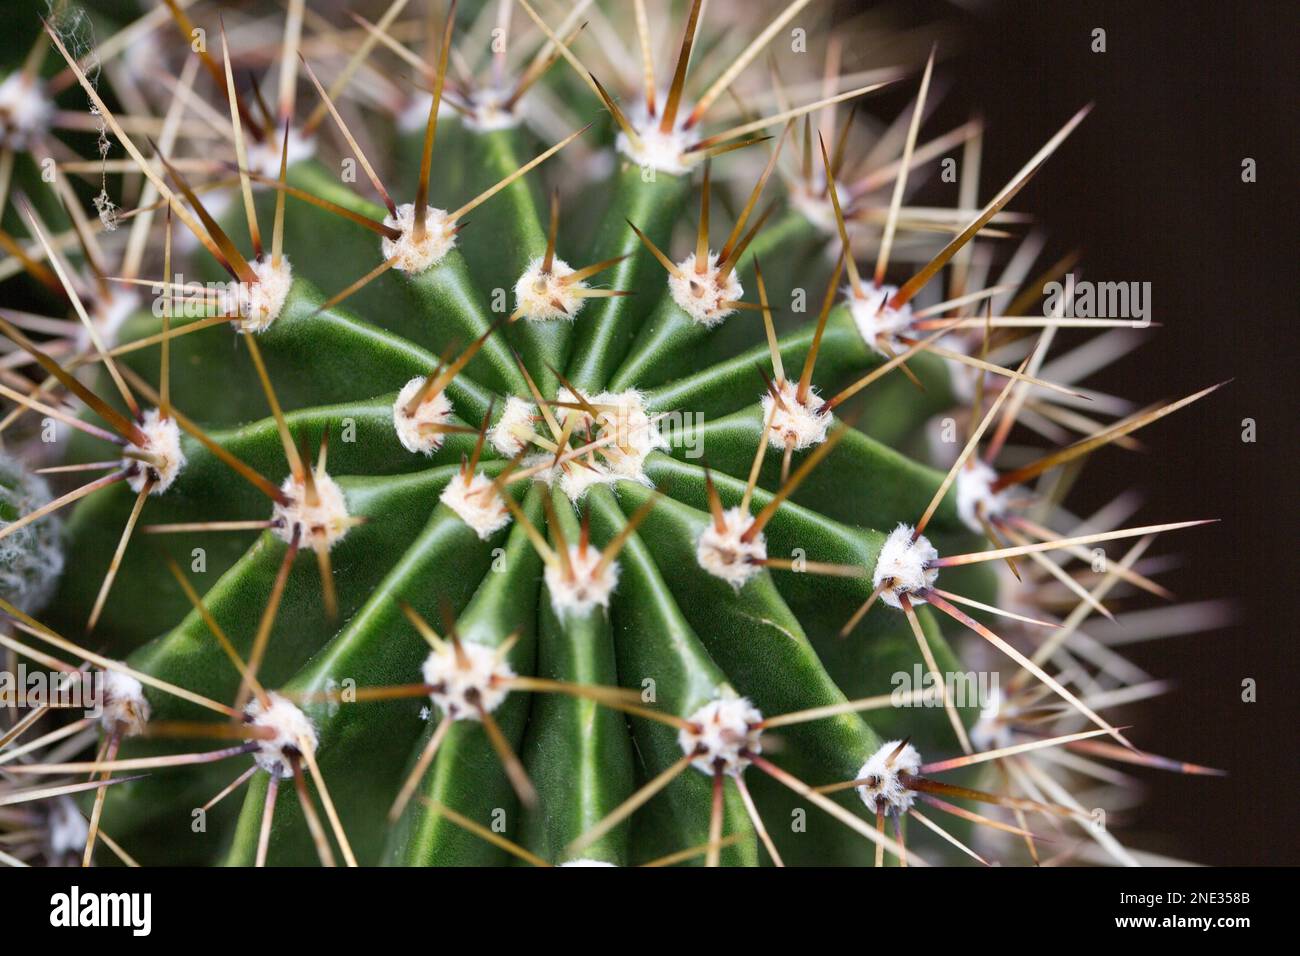 Die Stacheln eines Kaktus in Nahaufnahme - primo piano delle spine di un cactus Foto Stock